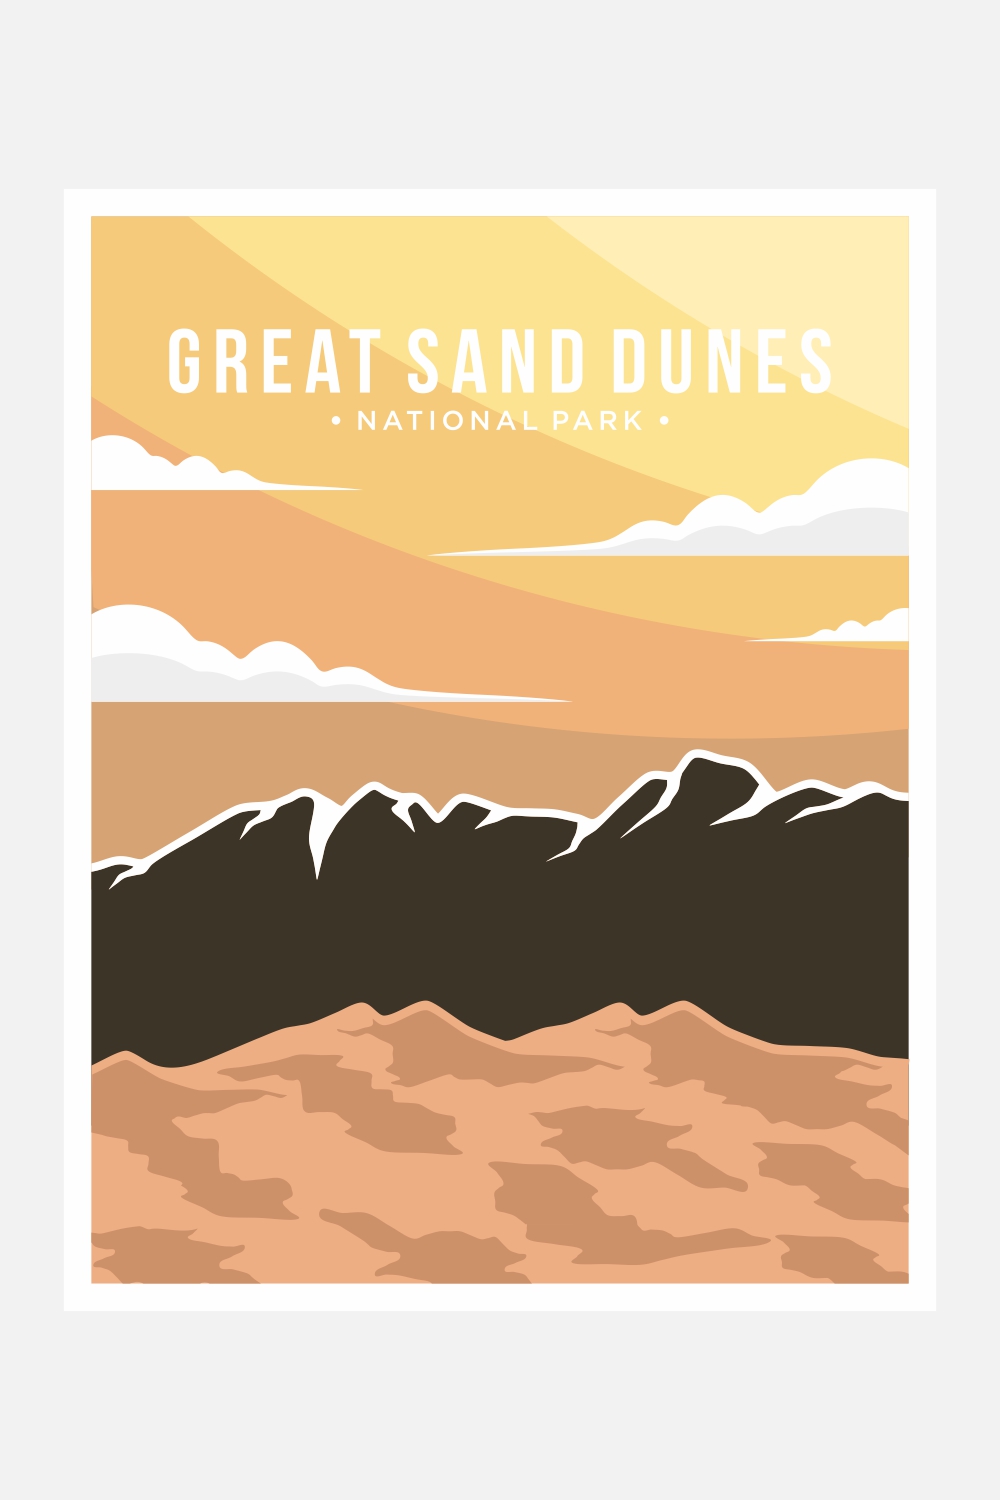 Great Sand Dune national park poster vector illustration design – Only $8 pinterest preview image.